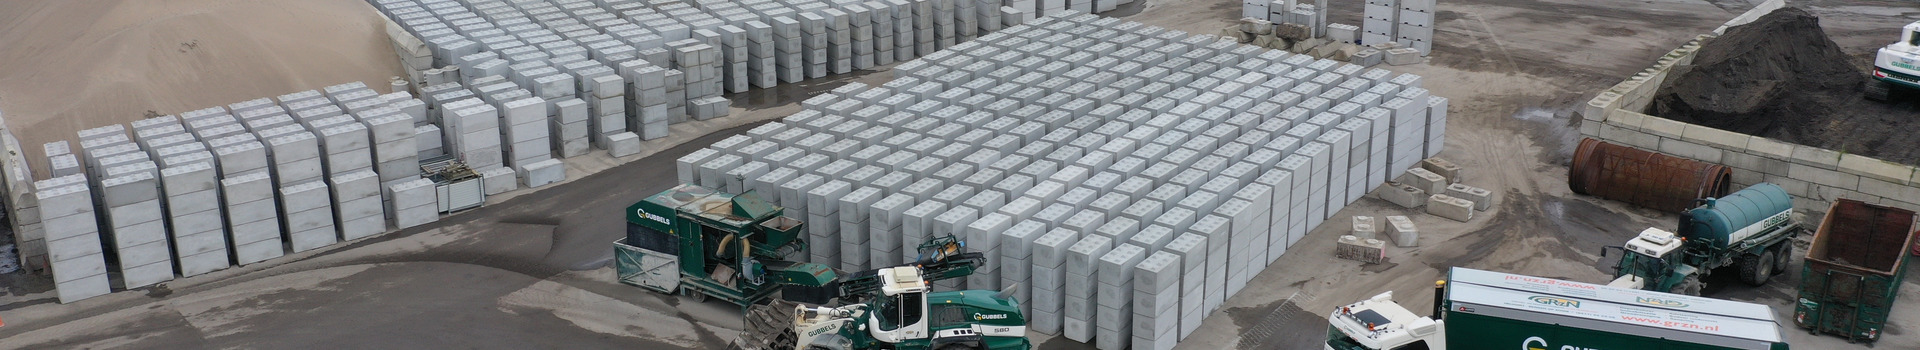 mega betonblokken vervoeren